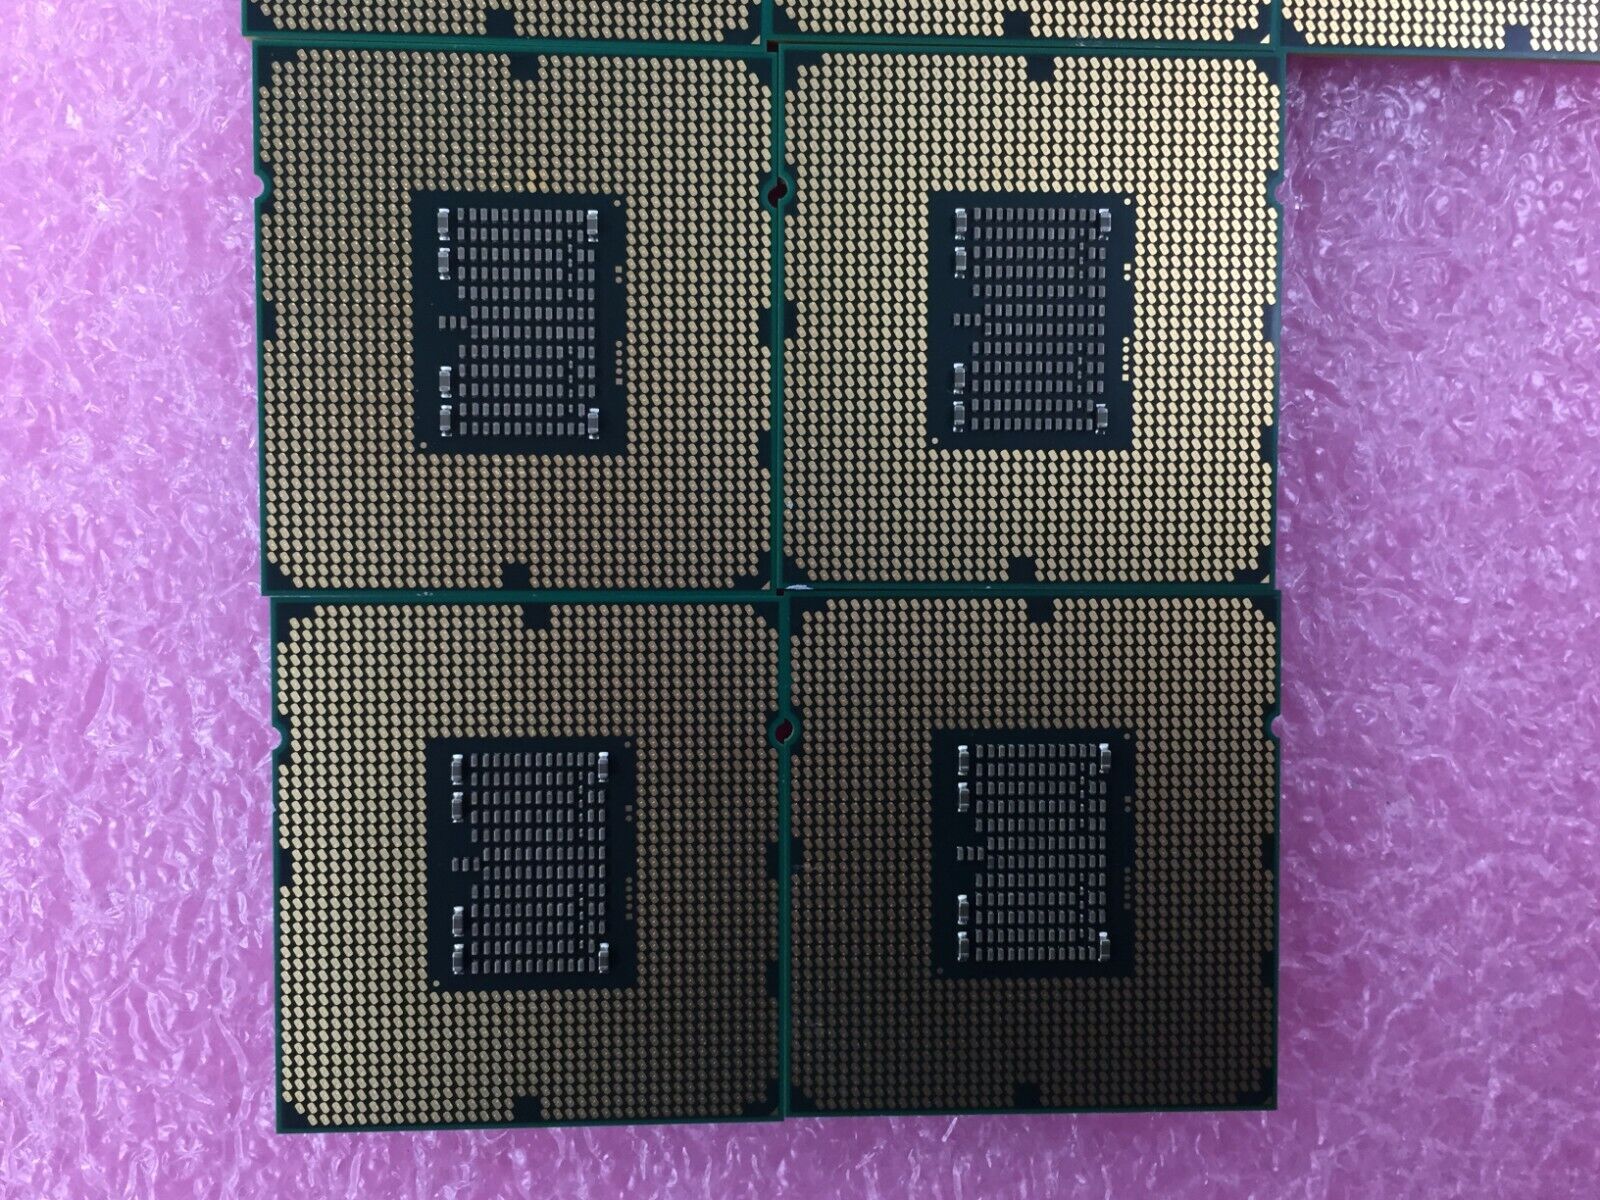 Lot of (10) Intel Xeon E5640 SLBVC 2.66GHz LGA1366 Quad Core Server Processor